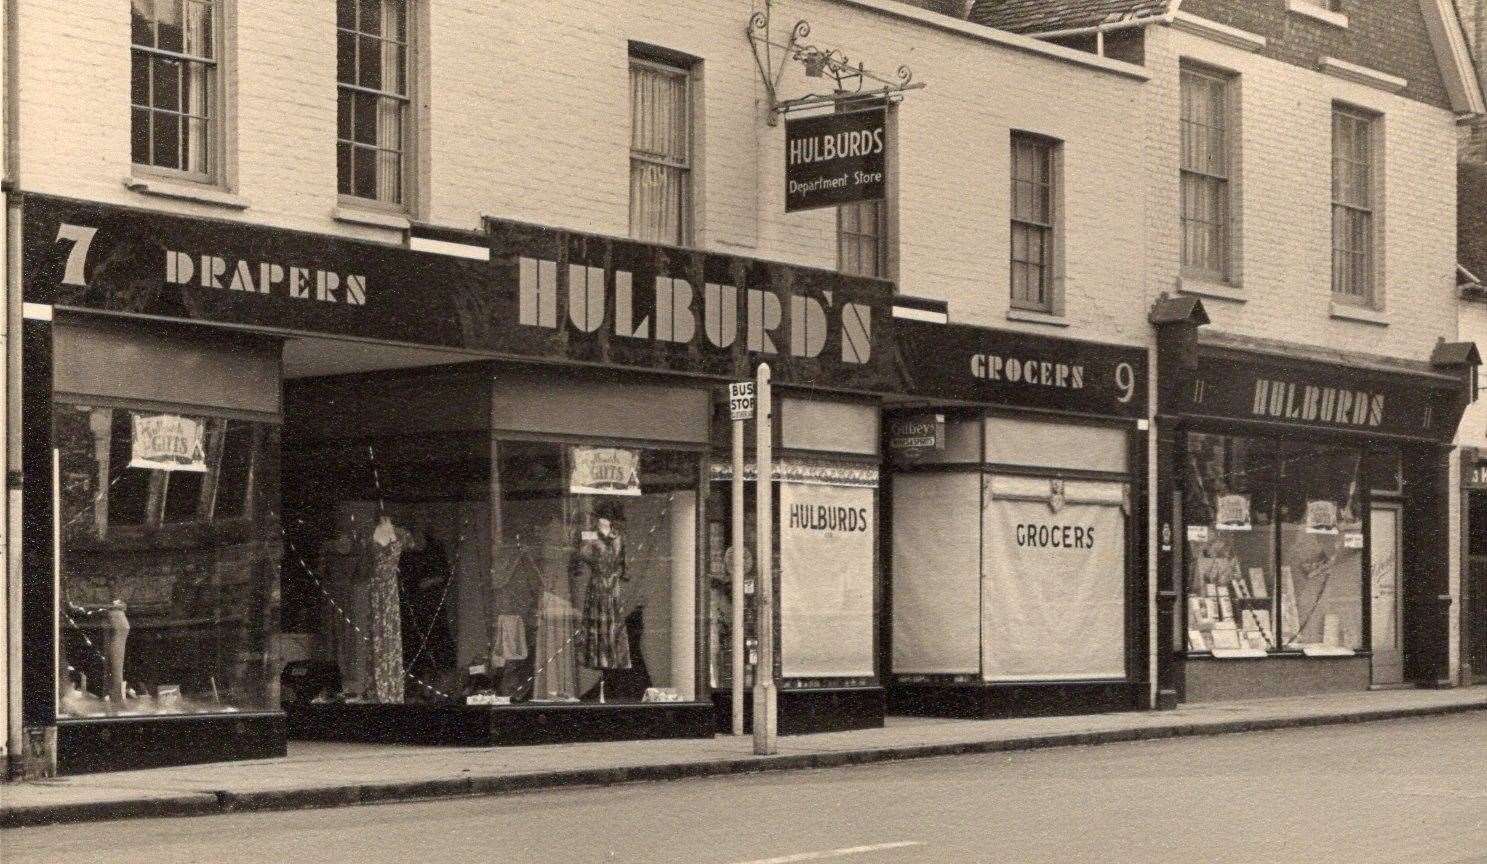 Hulburds department store in 1950